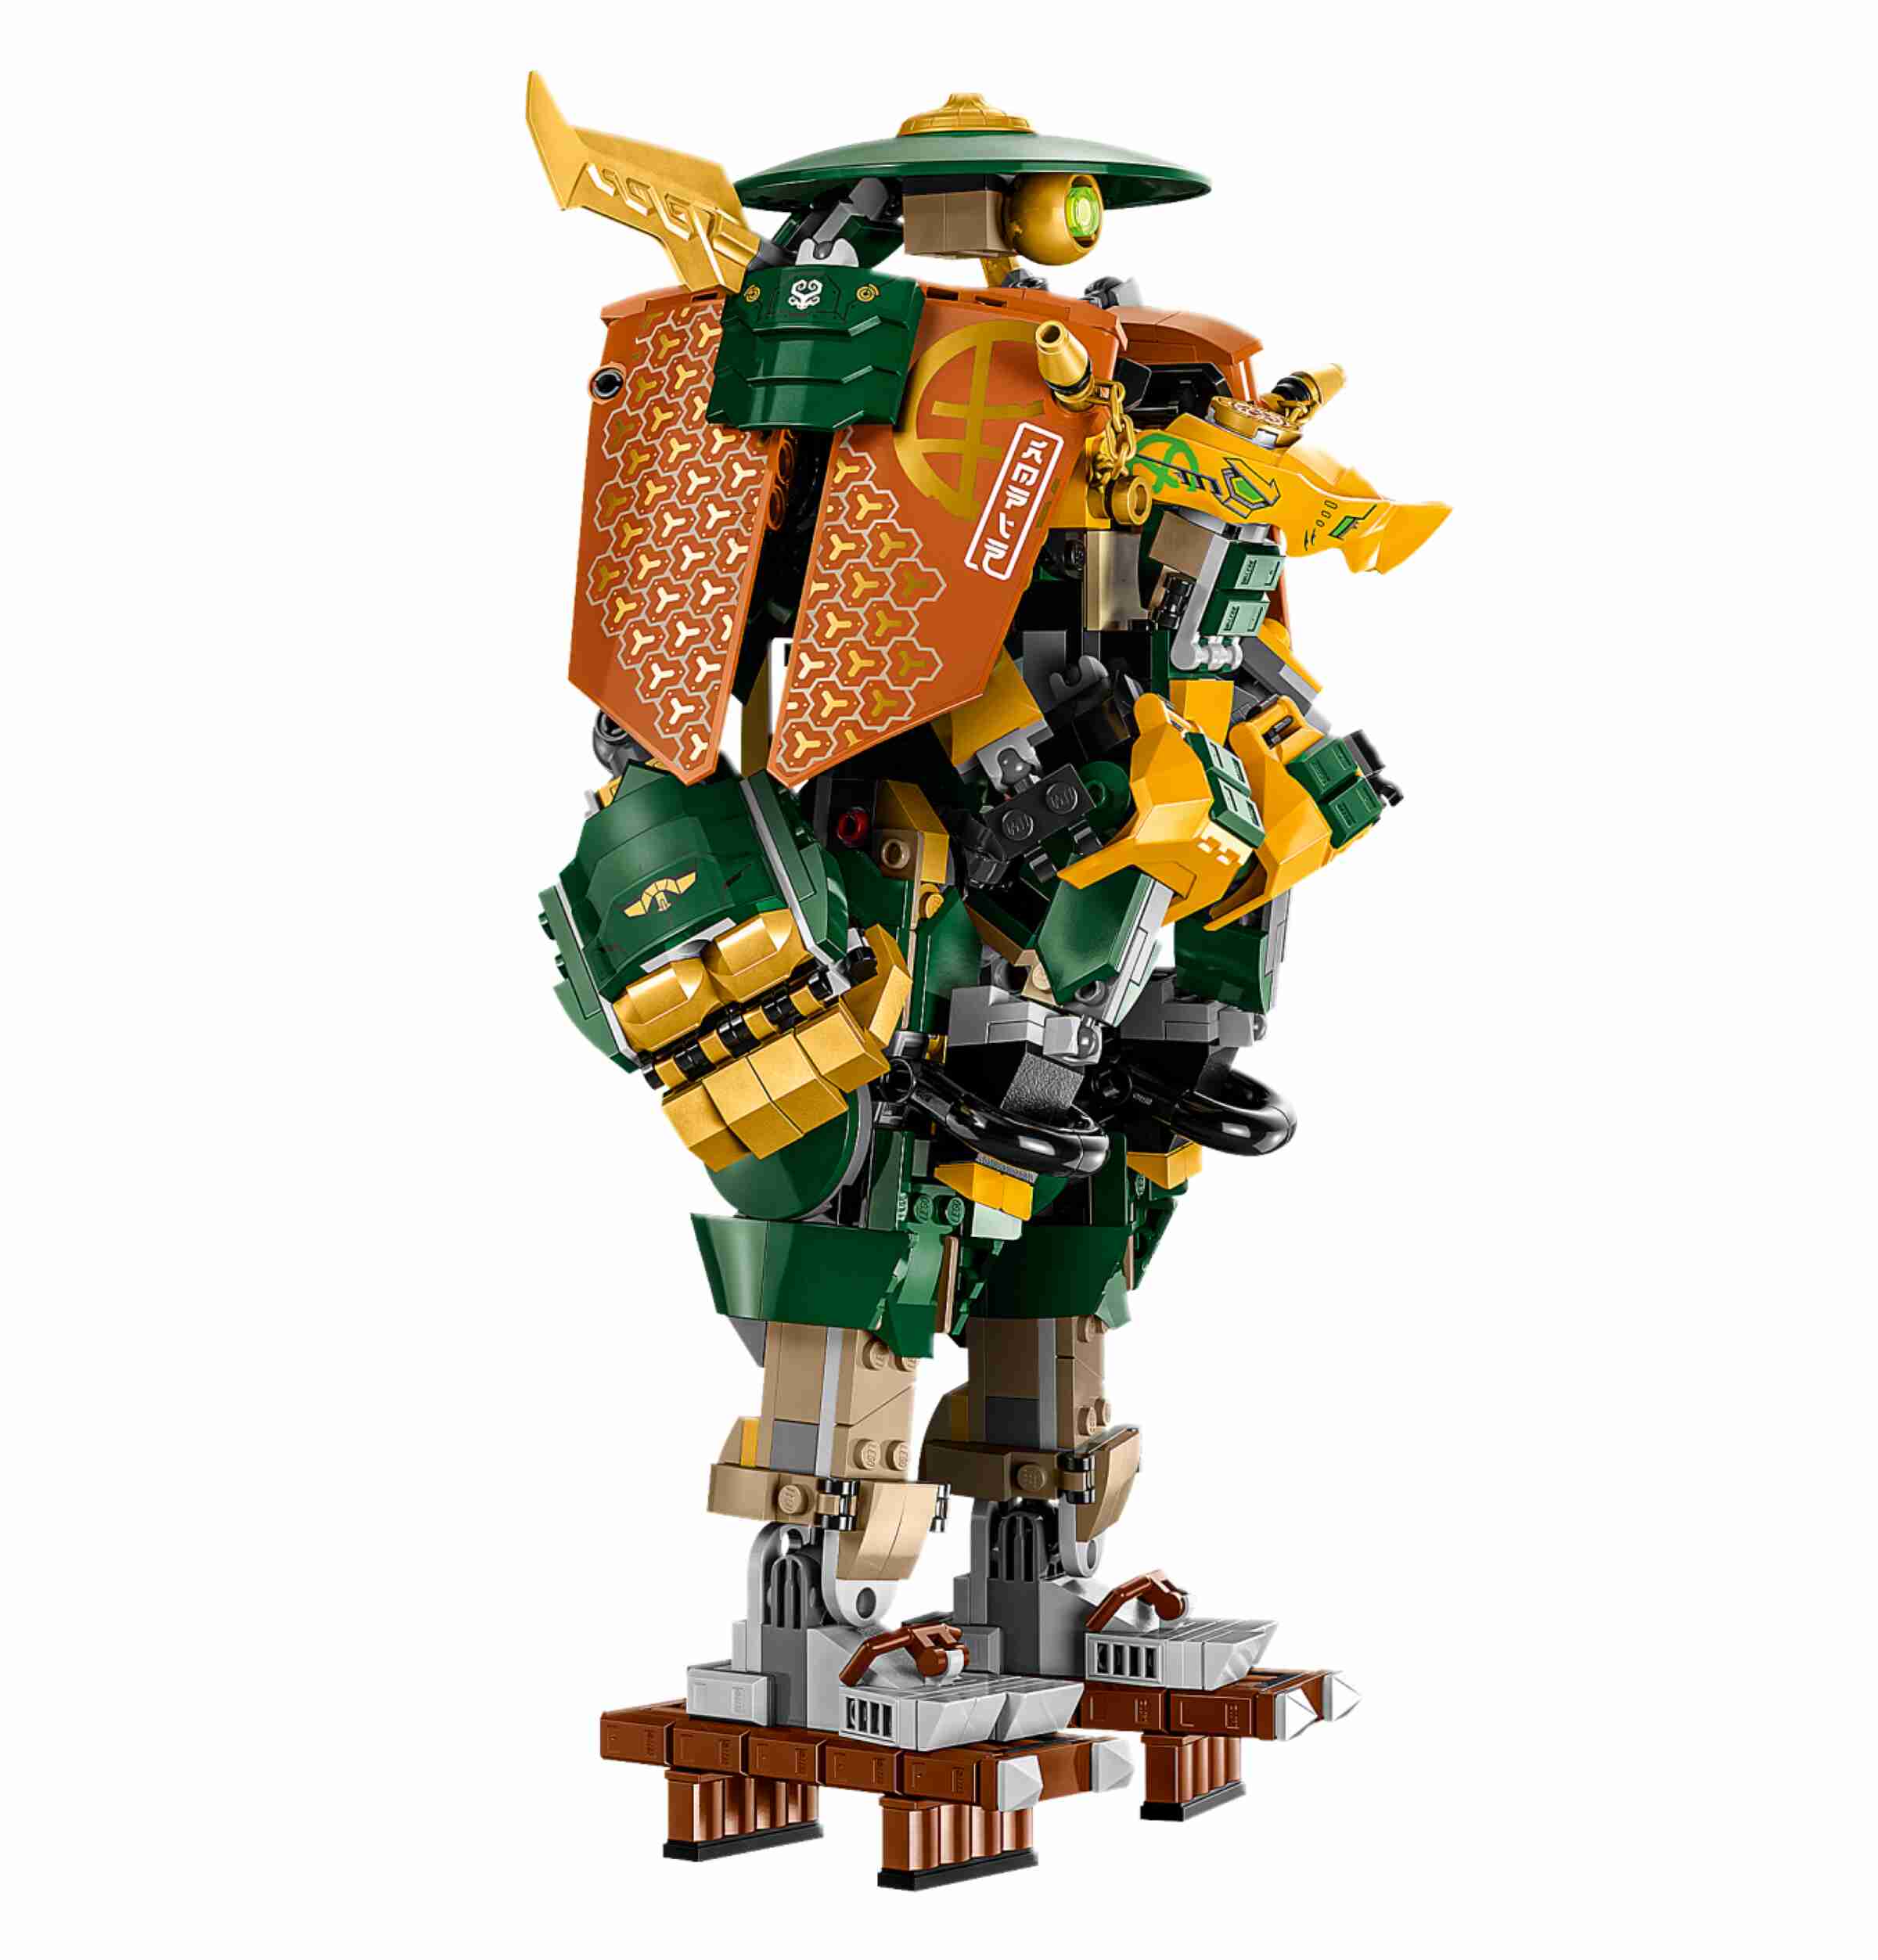 LEGO 71794 NINJAGO Lloyds und Arins Training-Mechs, 5 Minifiguren